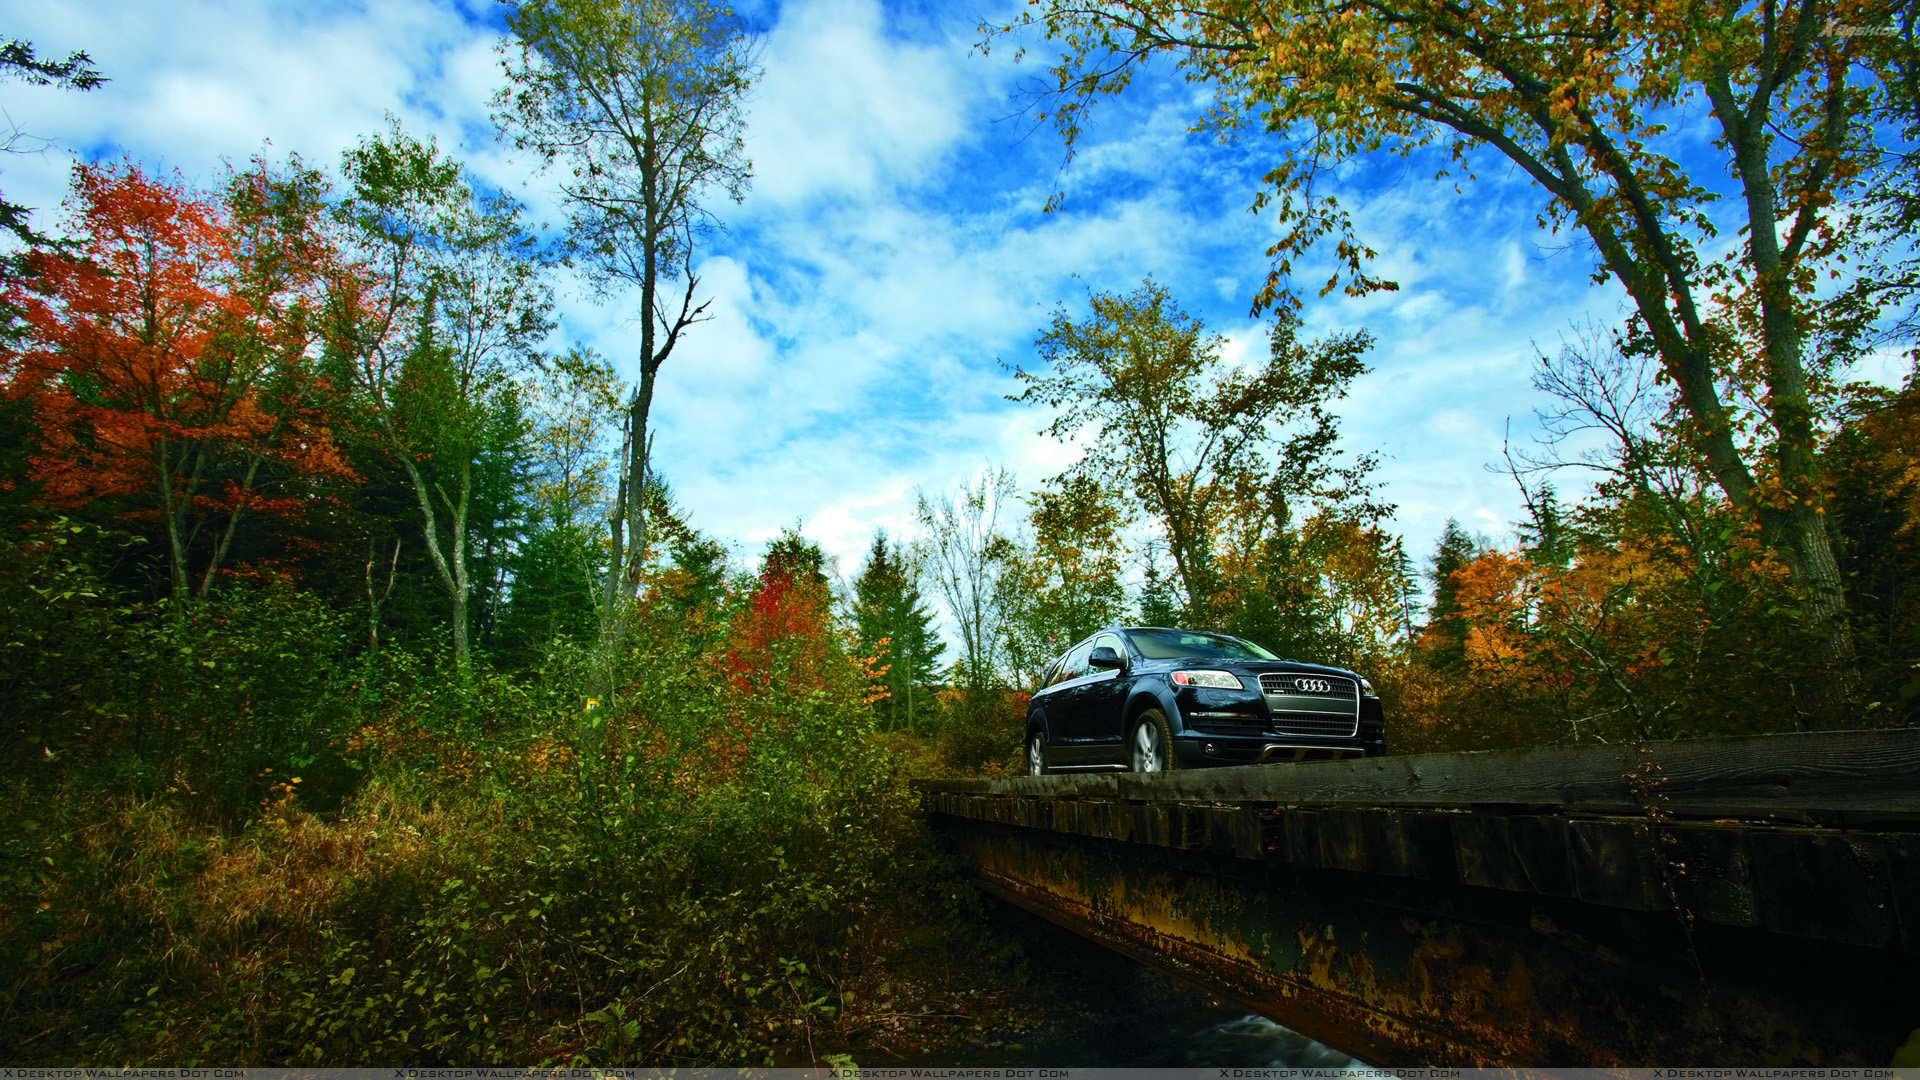 View Wallpaper Details - Audi Q7 Black On Road , HD Wallpaper & Backgrounds